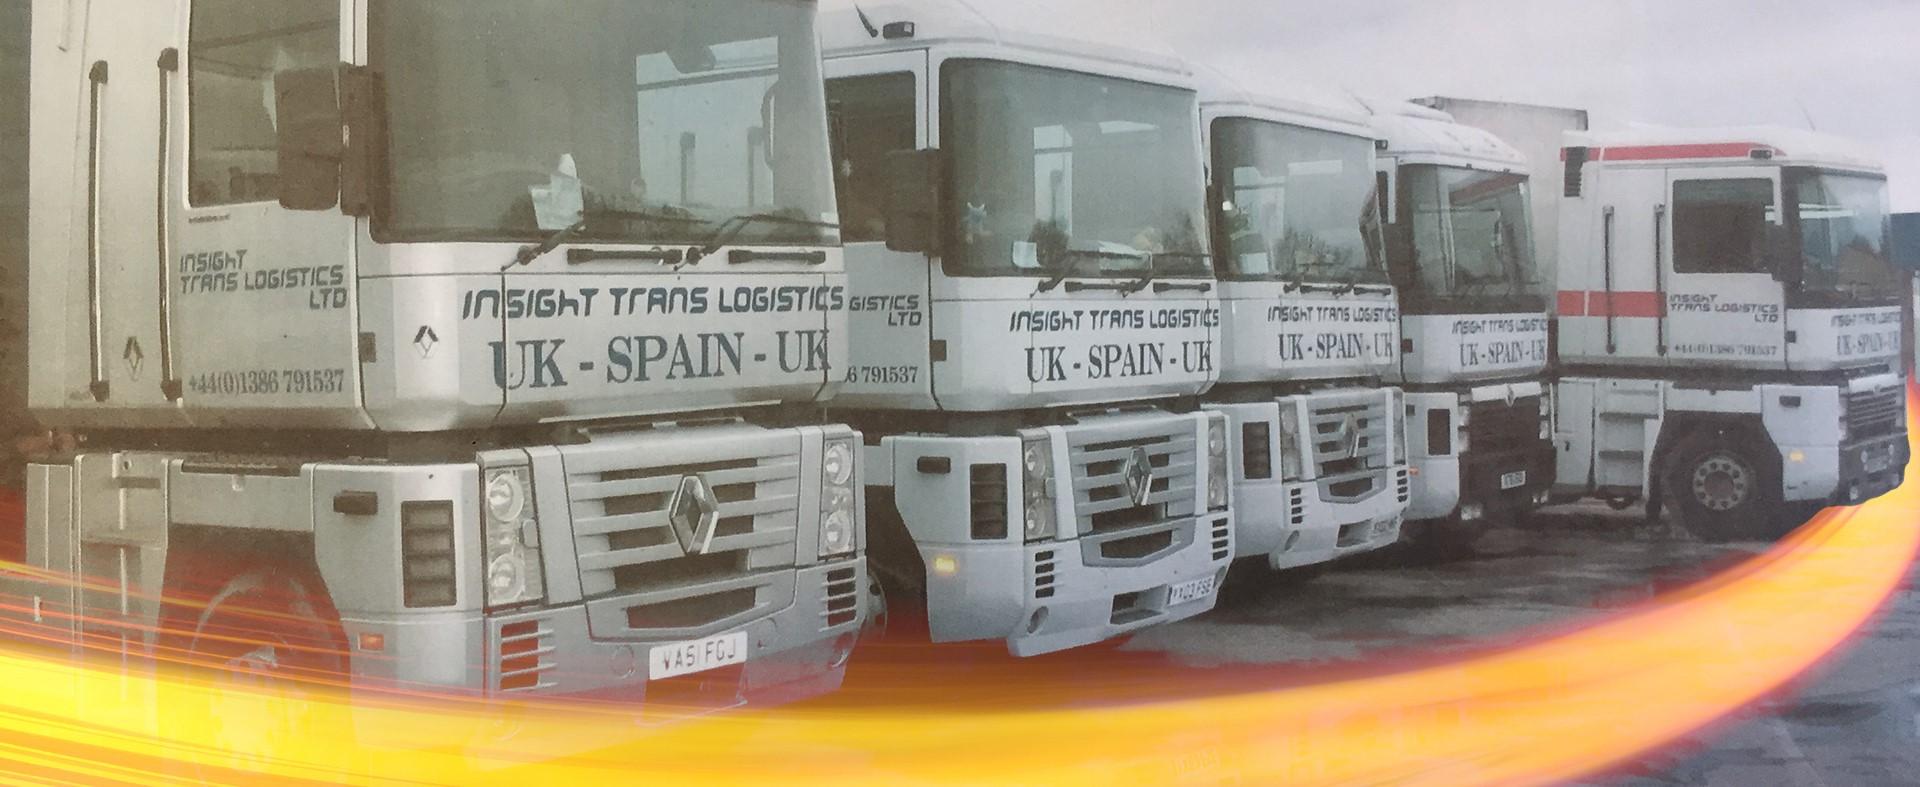 The History of Insight Trans Logistics 